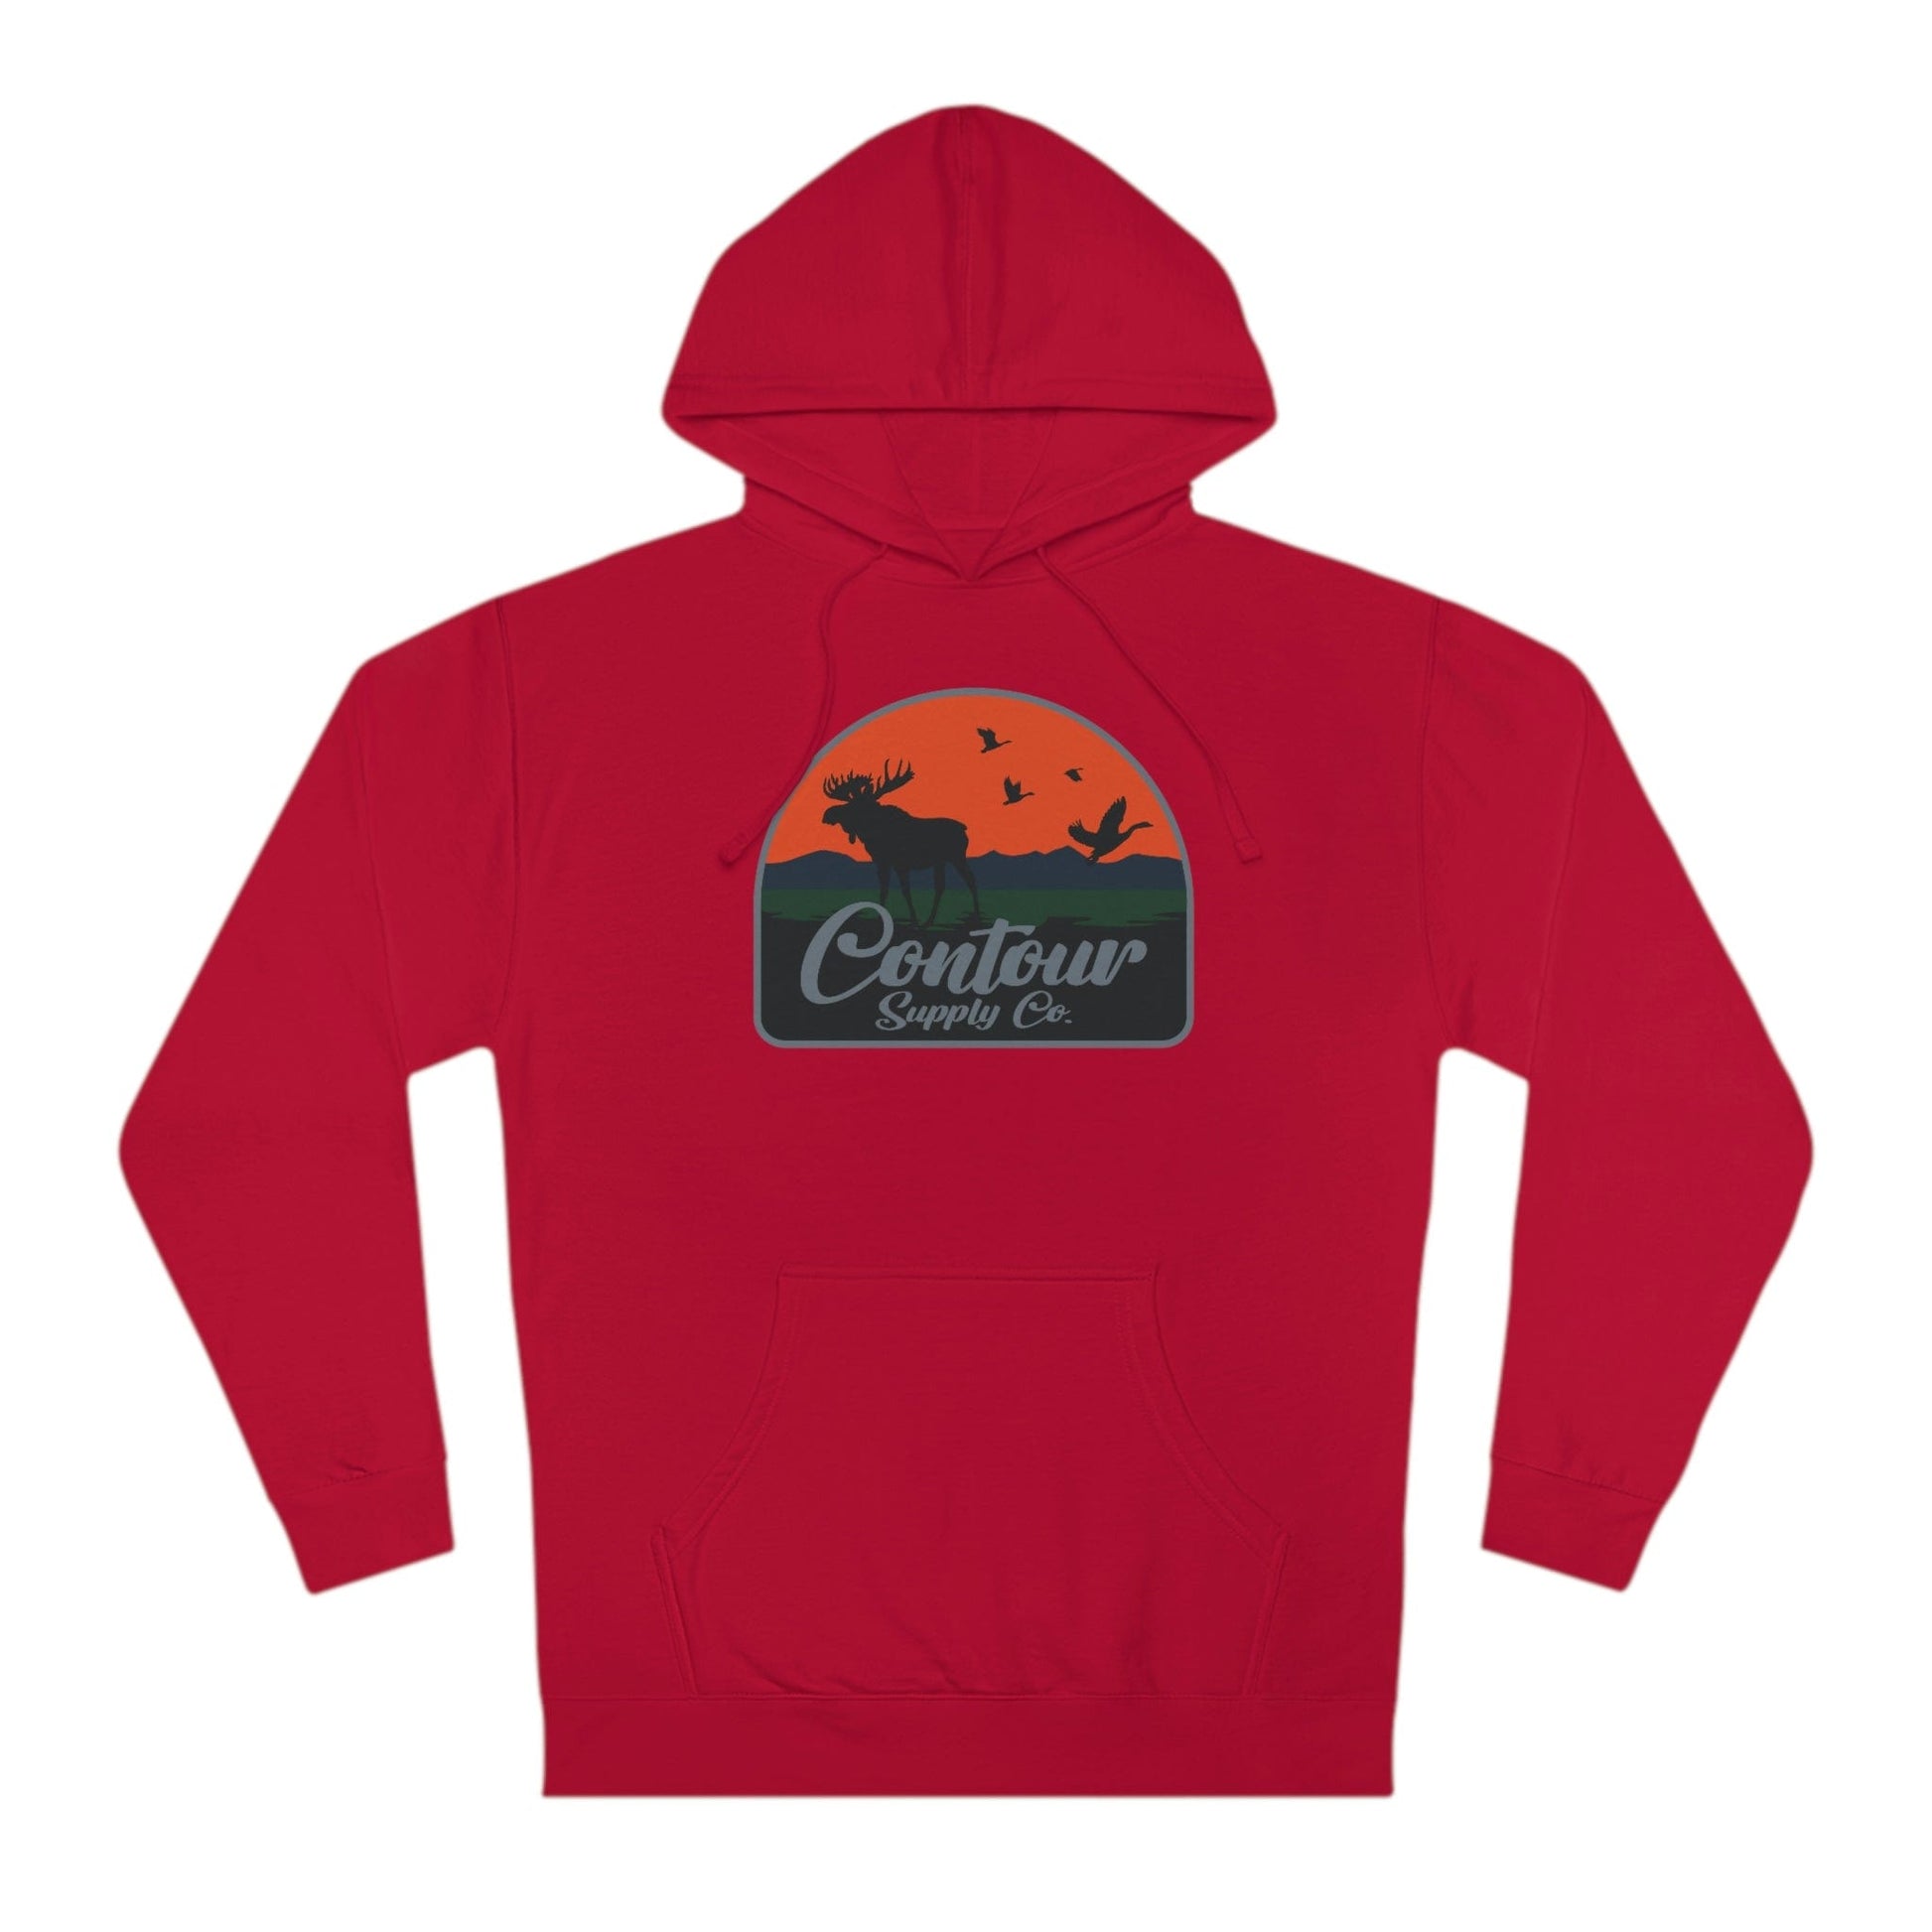 Hoodie Red / XS Back Country - Unisex Hooded Sweatshirt - Crest Logo